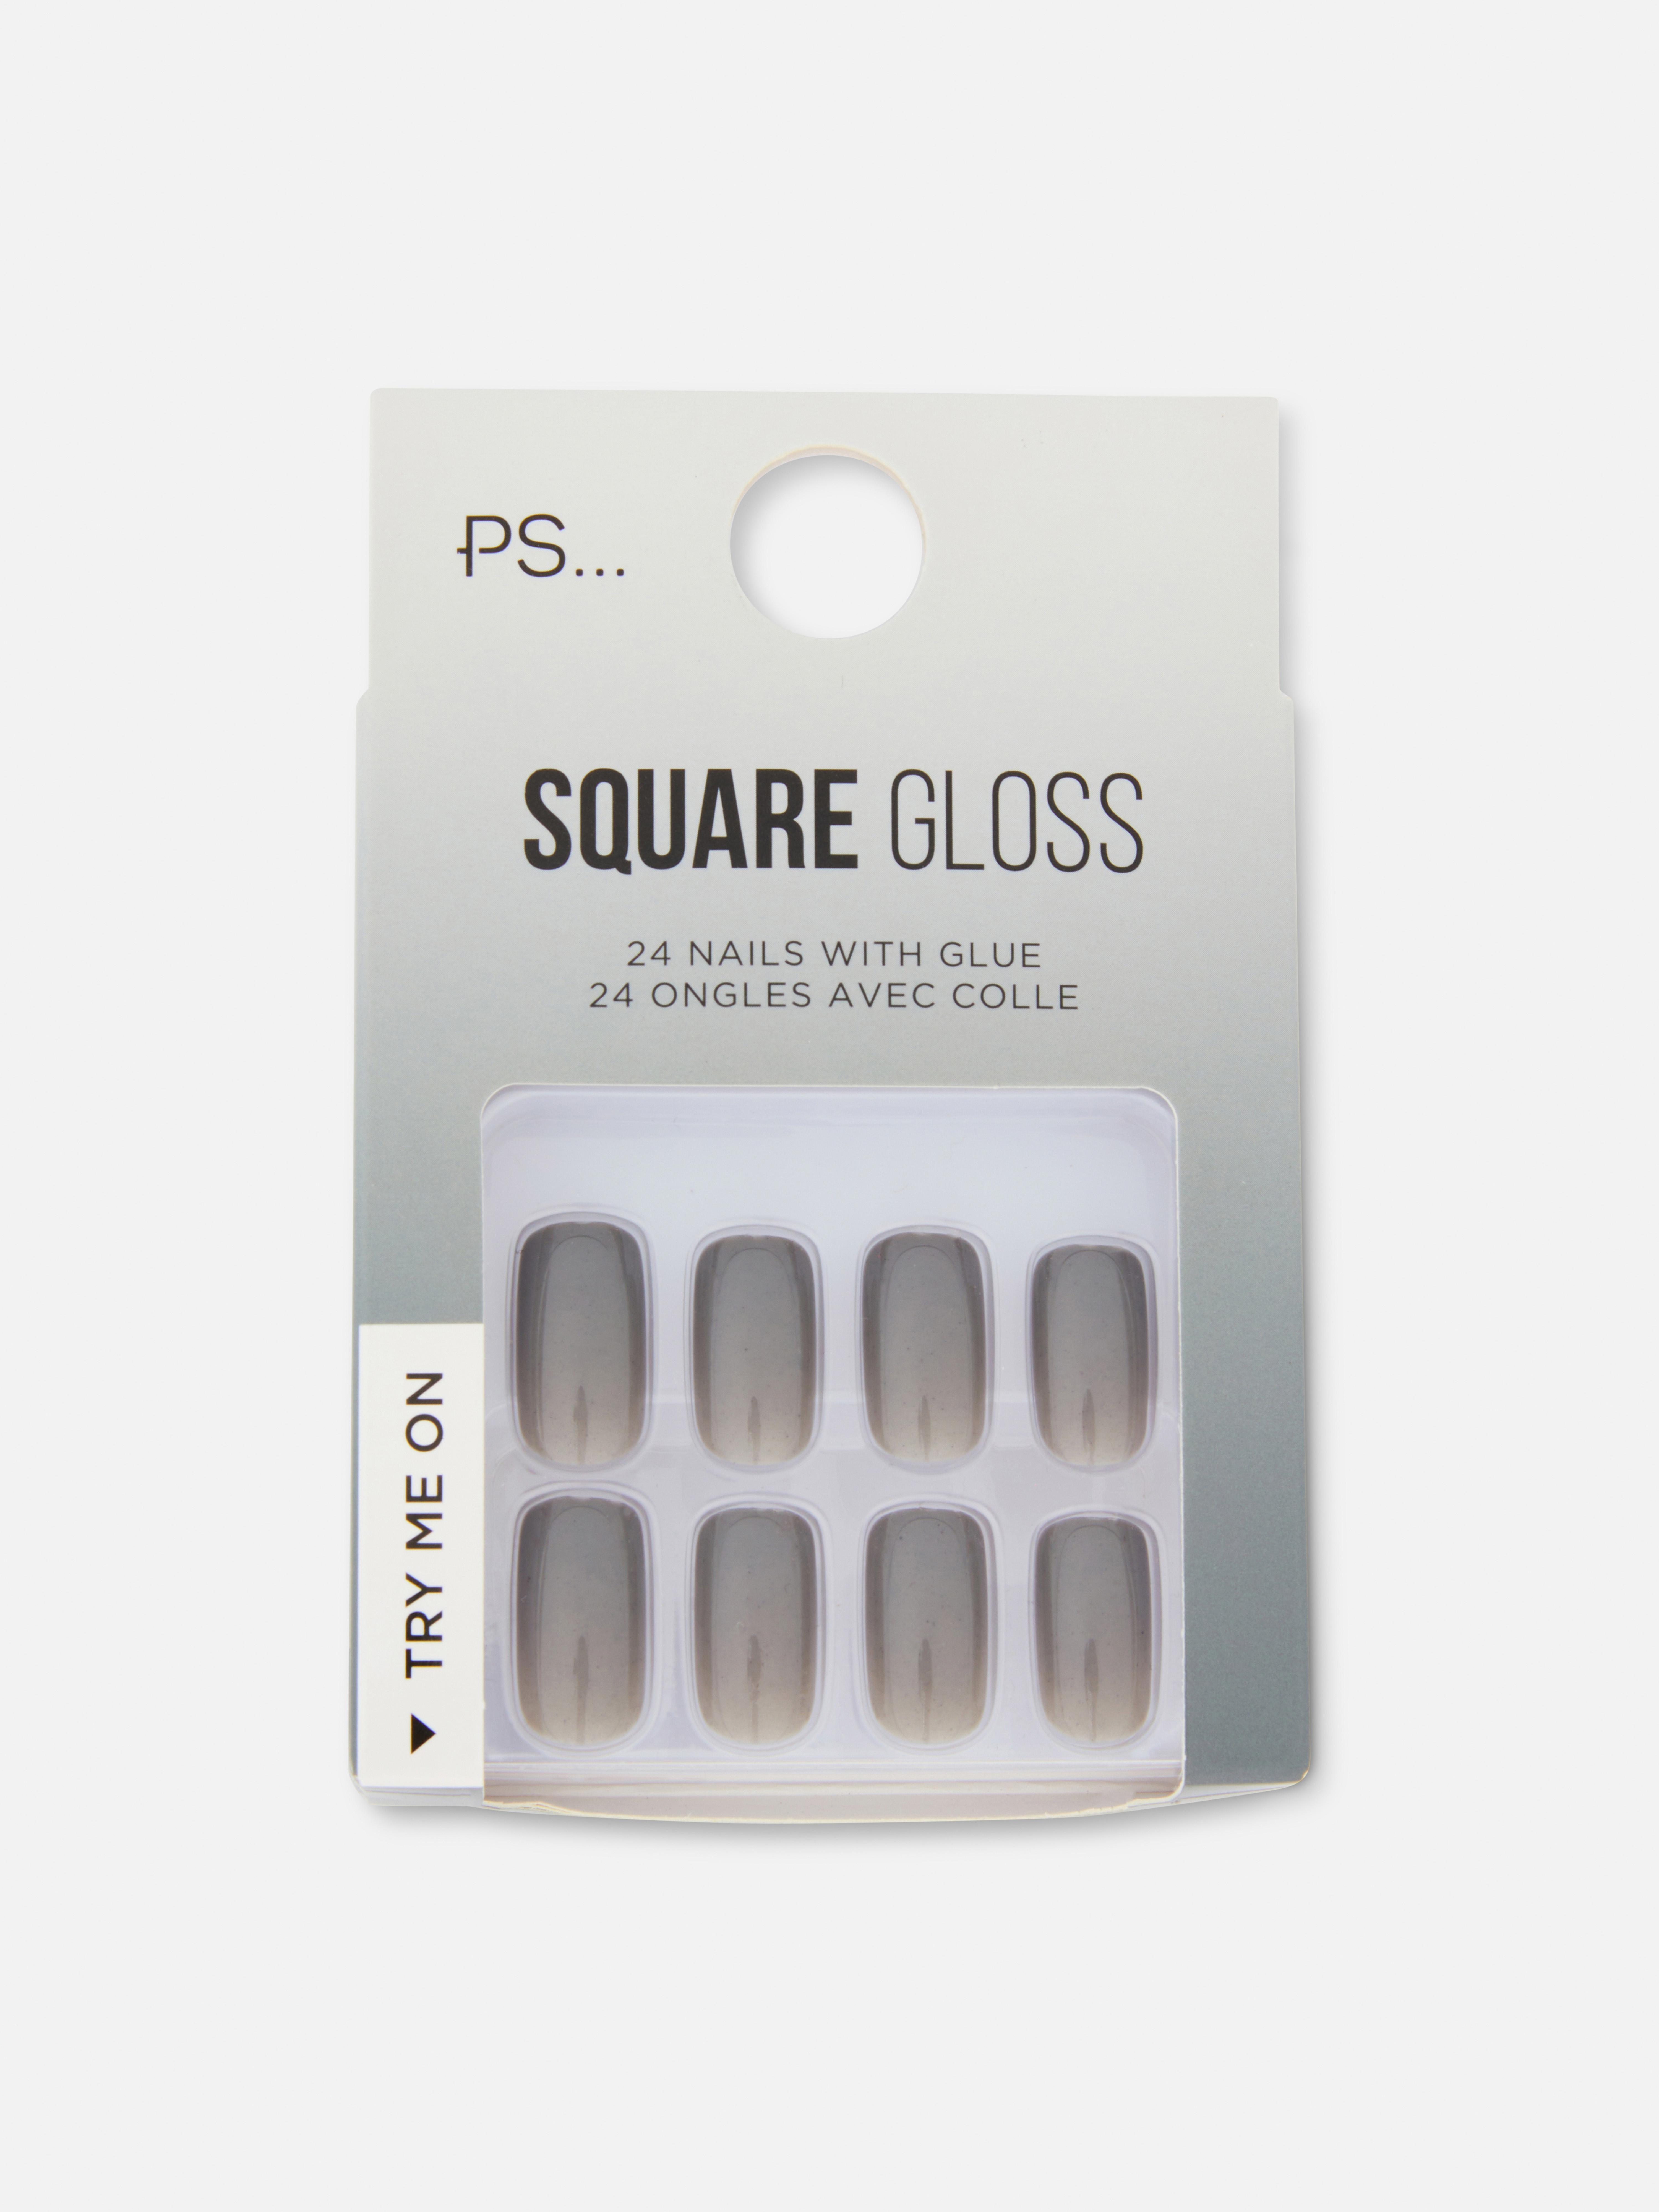 PS Square Gloss Faux Nails